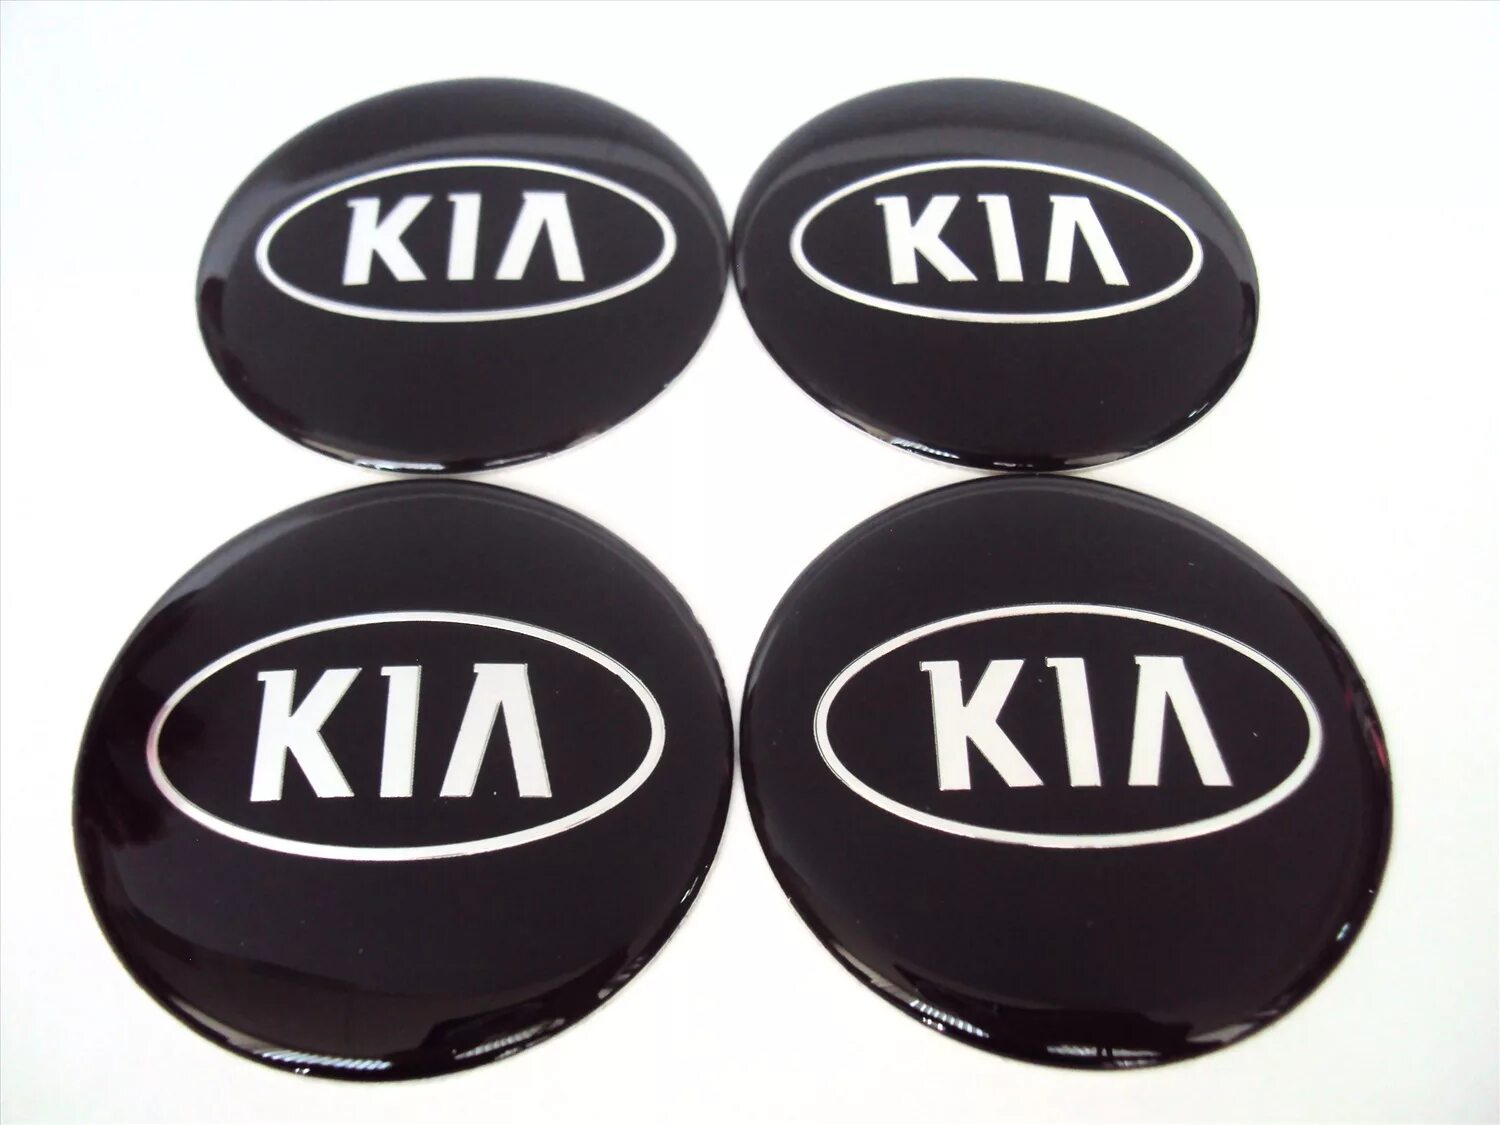 Заглушки на литые диски Kia колпачки в диск Киа. Заглушка литого диска Киа. Заглушка колесного диска 147мм. Заглушка колпачок на литой диск Kia. Логотип колпачка на диск